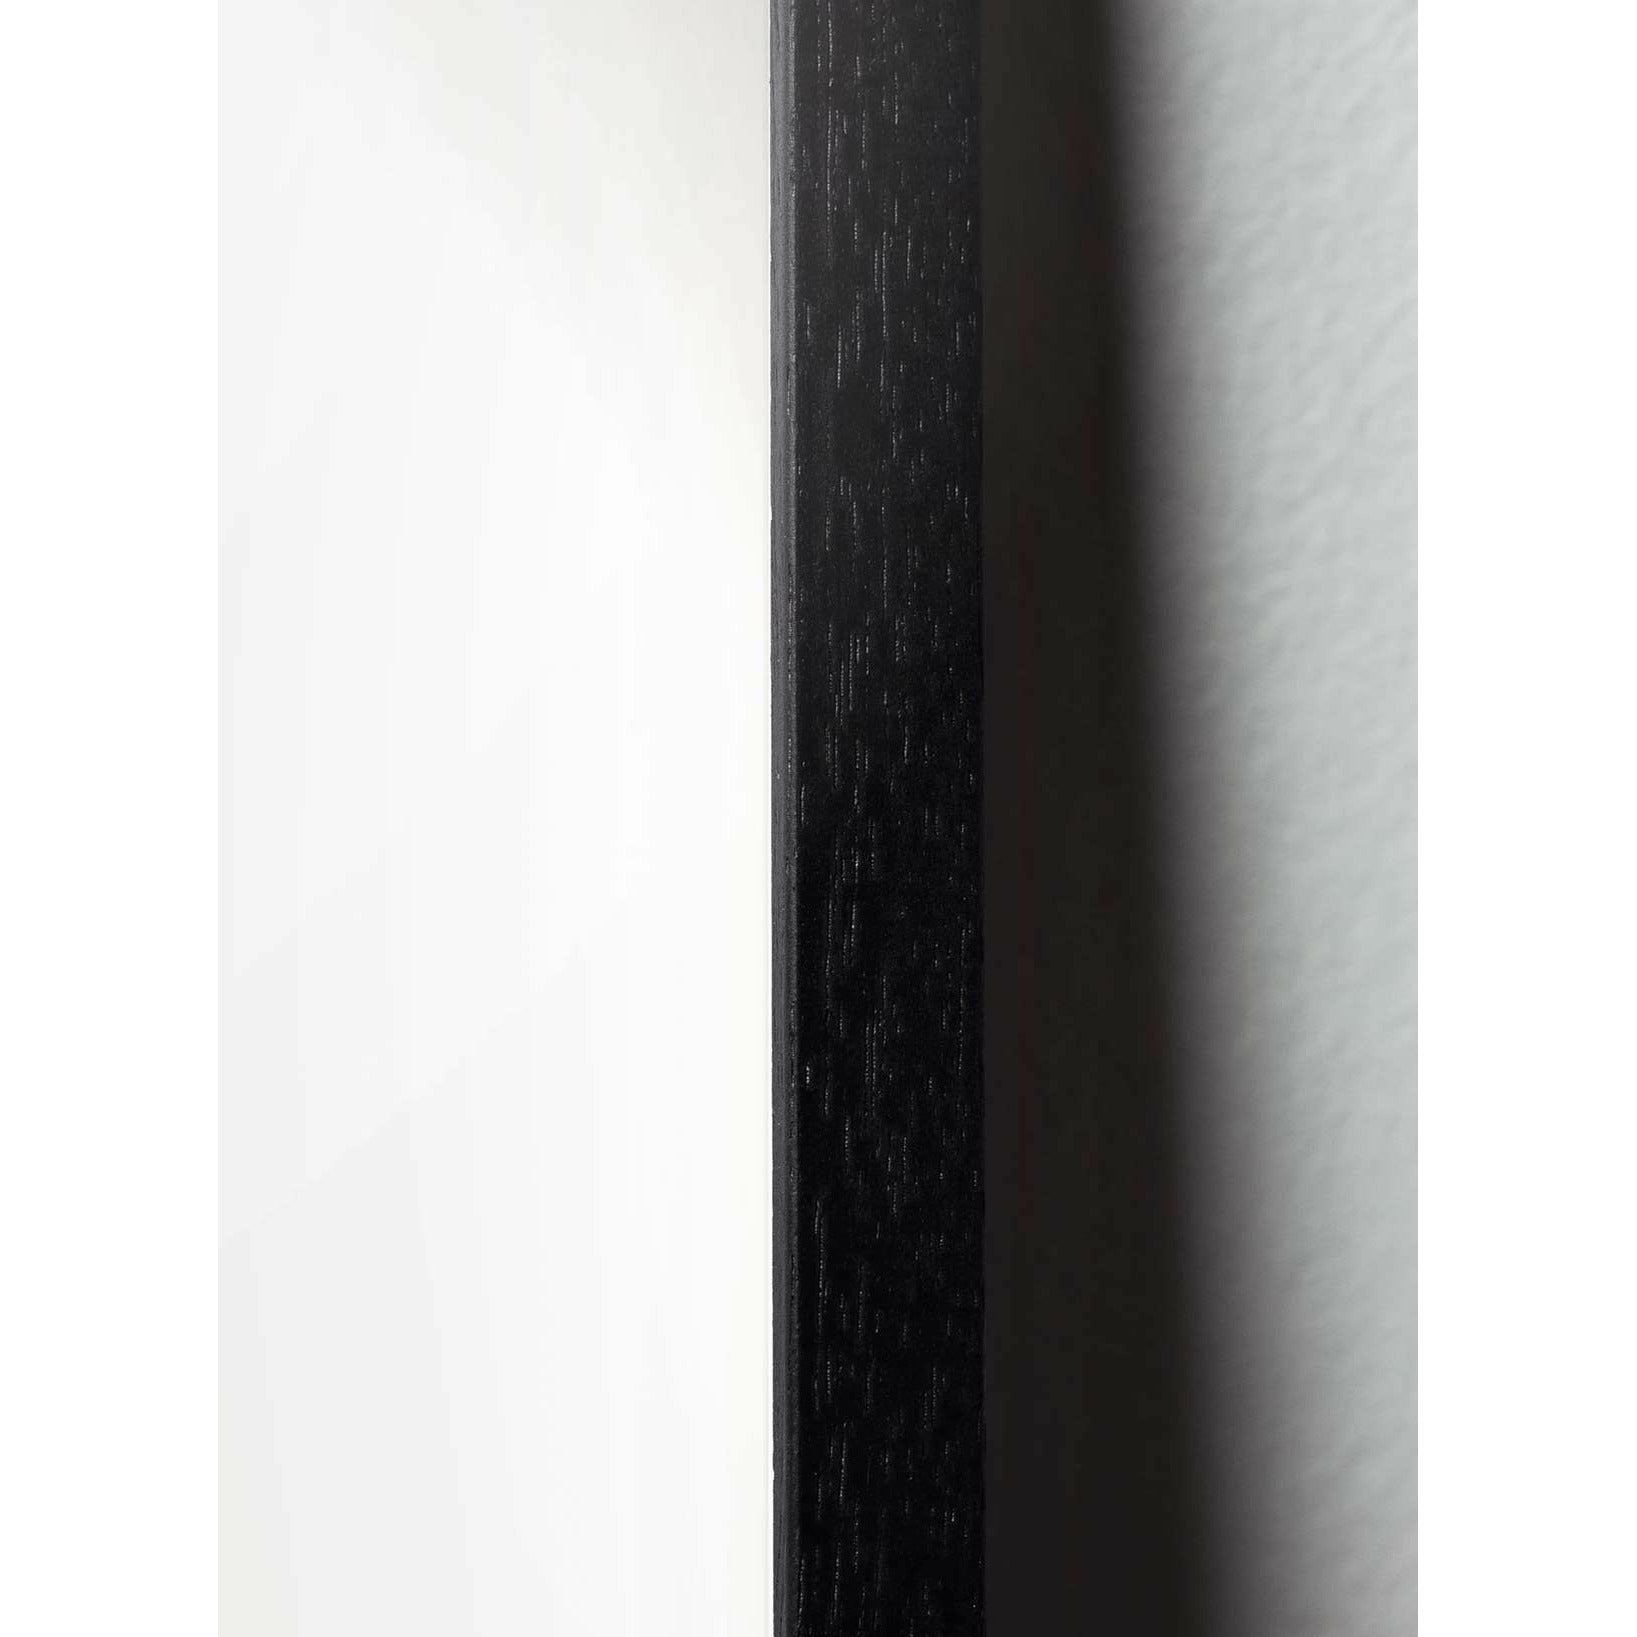 Brainchild Vinter bra klassisk affisch, ram i svart -målat trä 70x100 cm, svart bakgrund